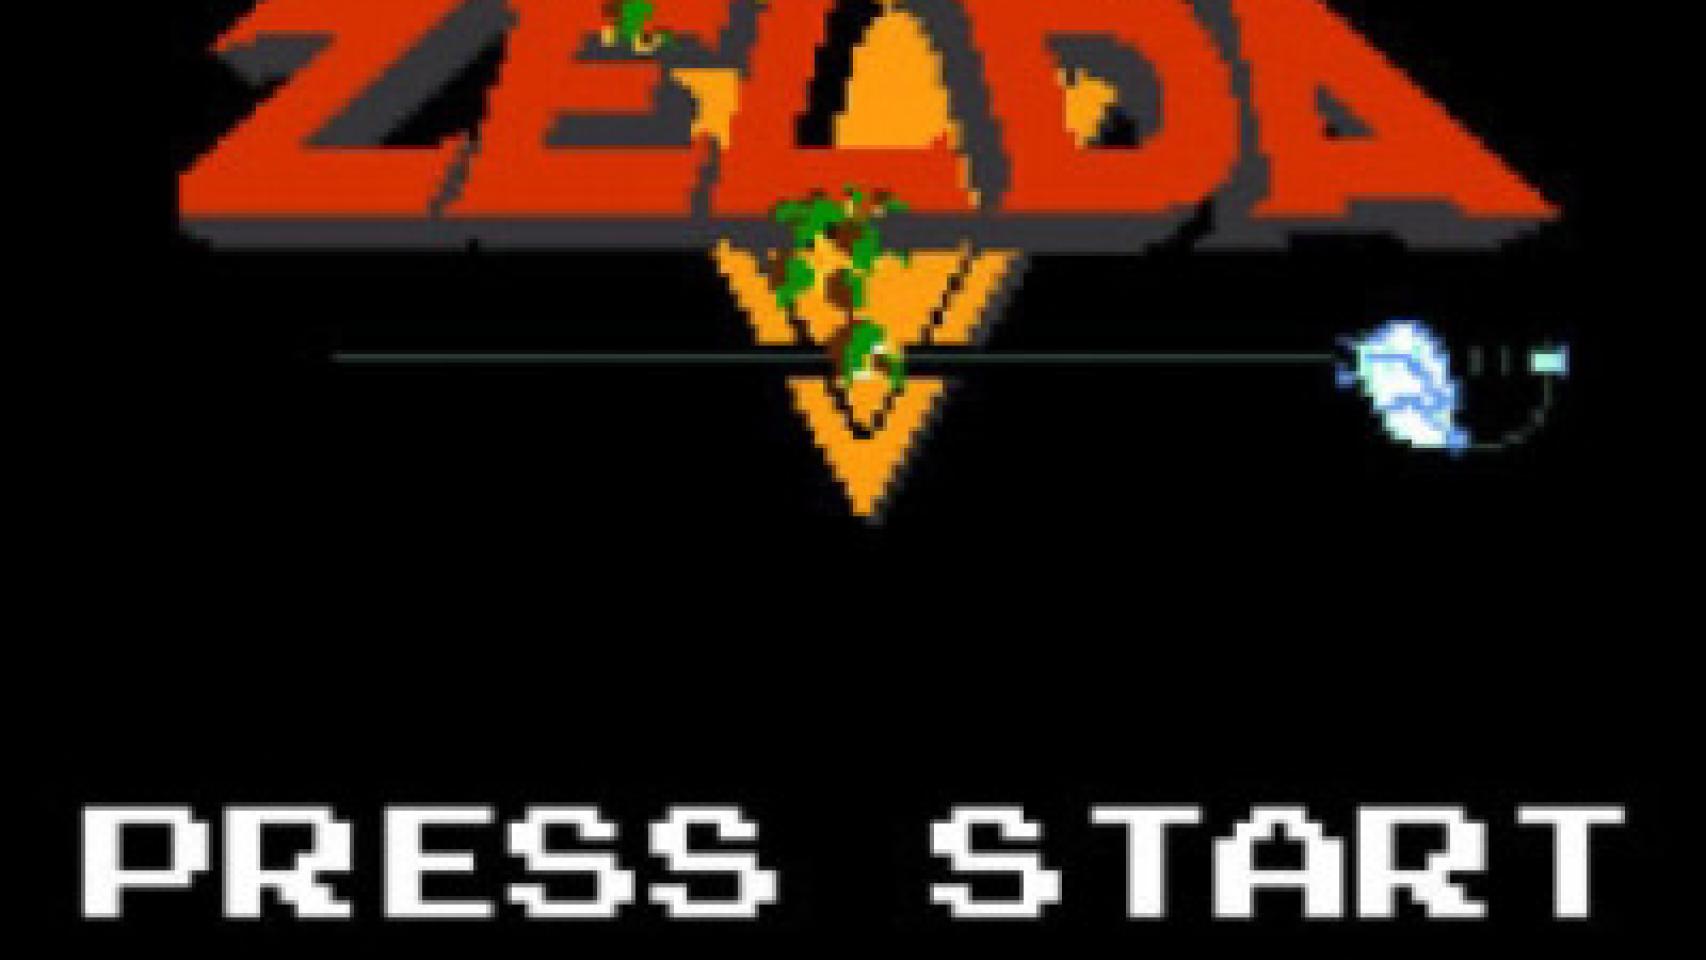 Crea tu Androide: Zelda Theme